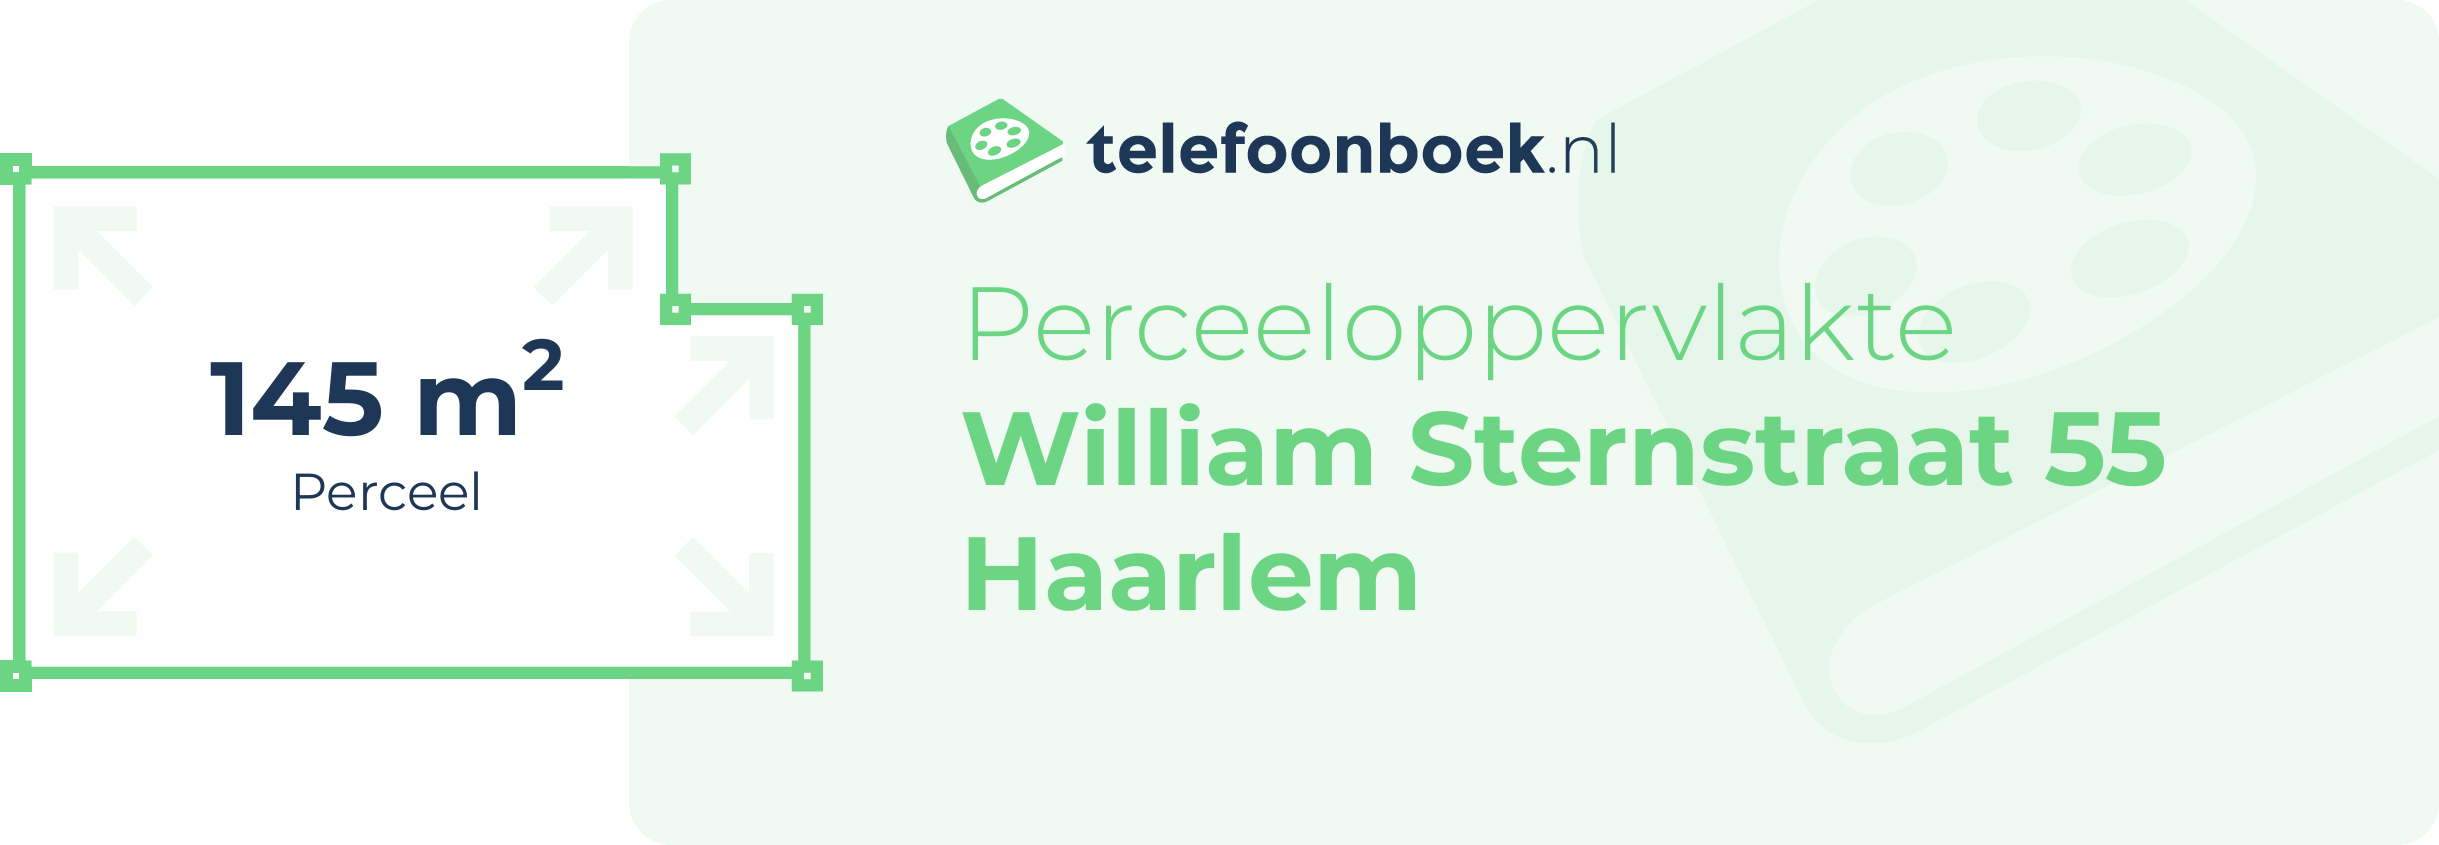 Perceeloppervlakte William Sternstraat 55 Haarlem